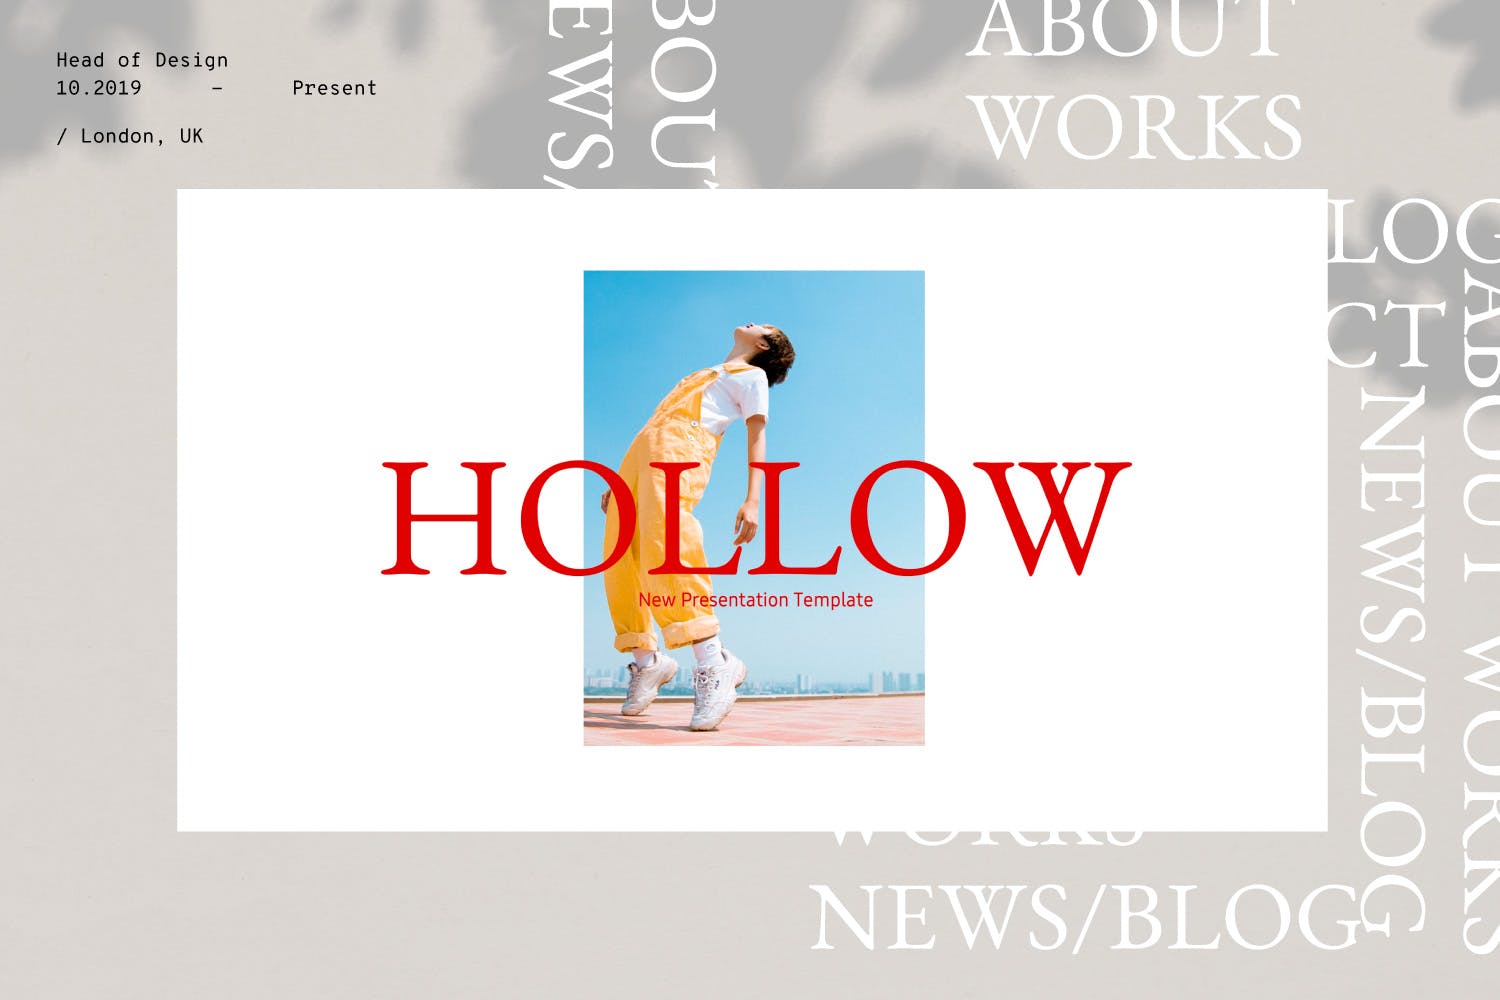 时尚杂志品牌主题宣讲PPT幻灯片模板Hollow Graphic Design Powerpoint插图1